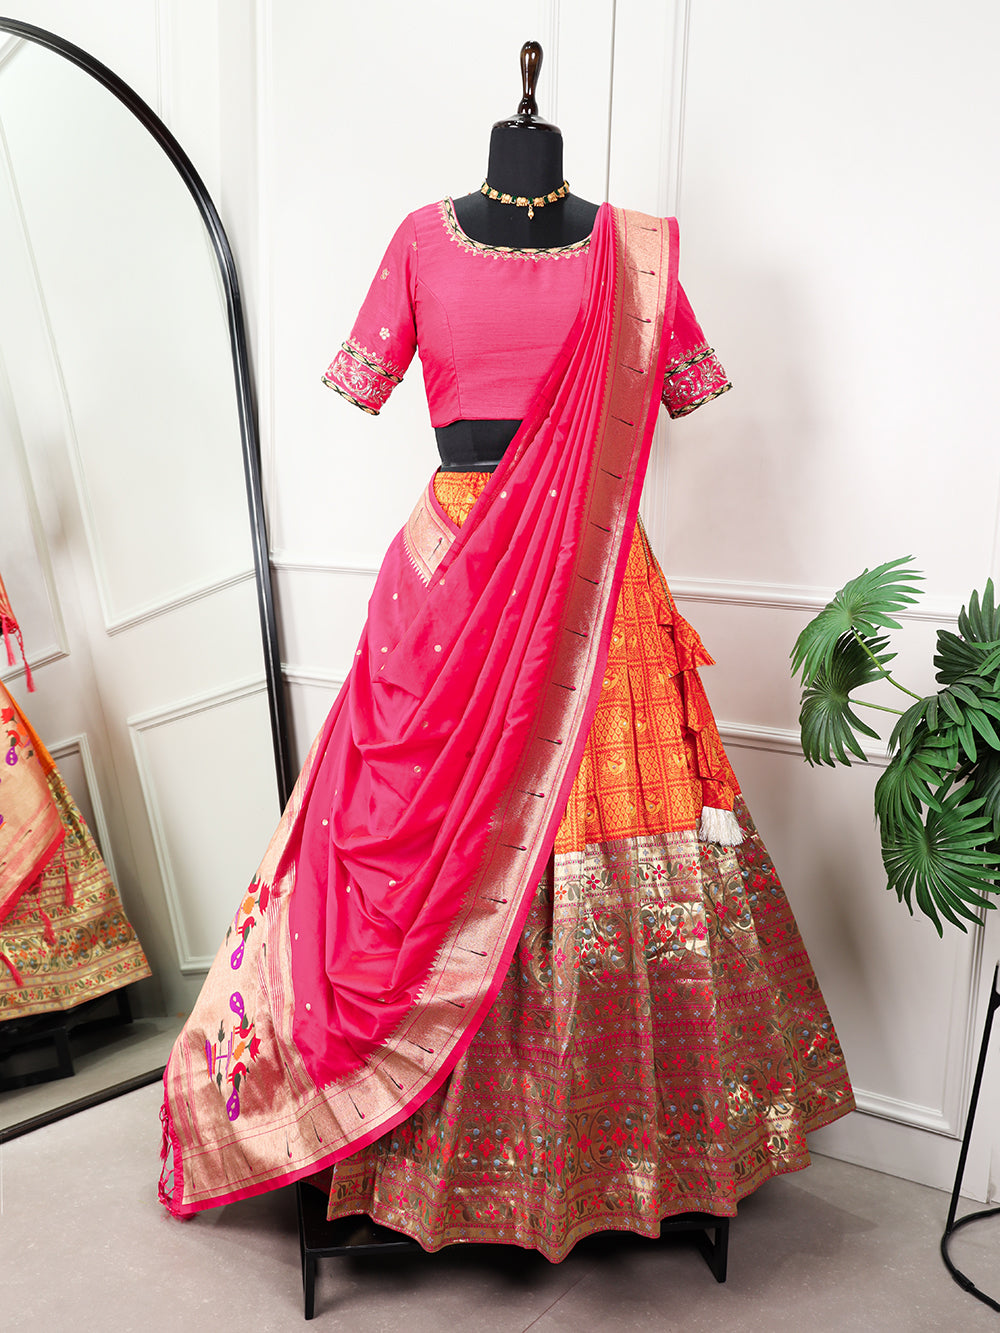 Shop Viscose Georgette Lehenga Sarees Online at Indian Cloth Store